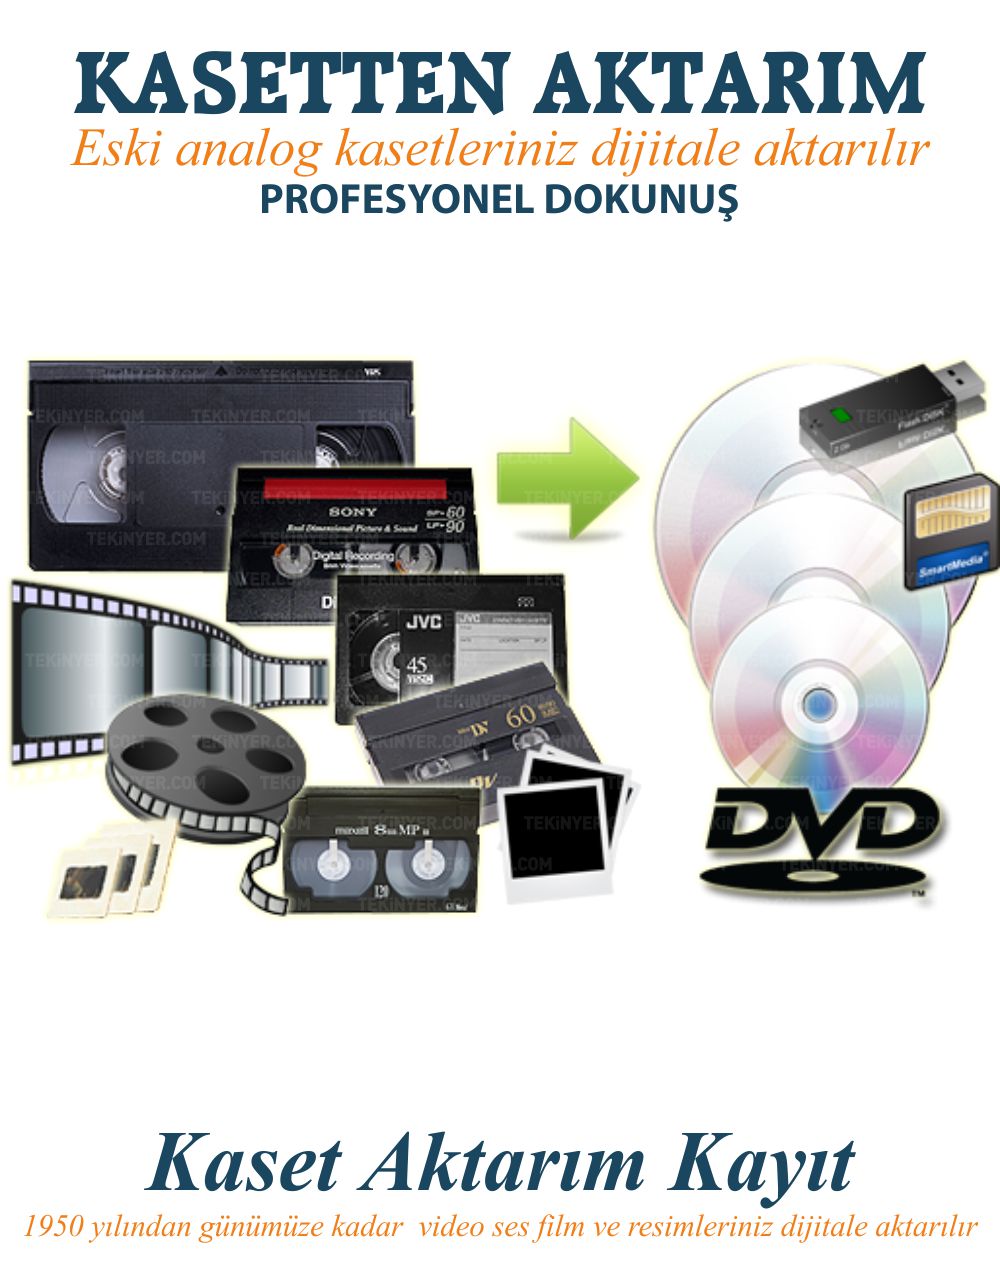 Vhs Betamax Hi8 Dijital8 Mini DV Kasetten Aktarma